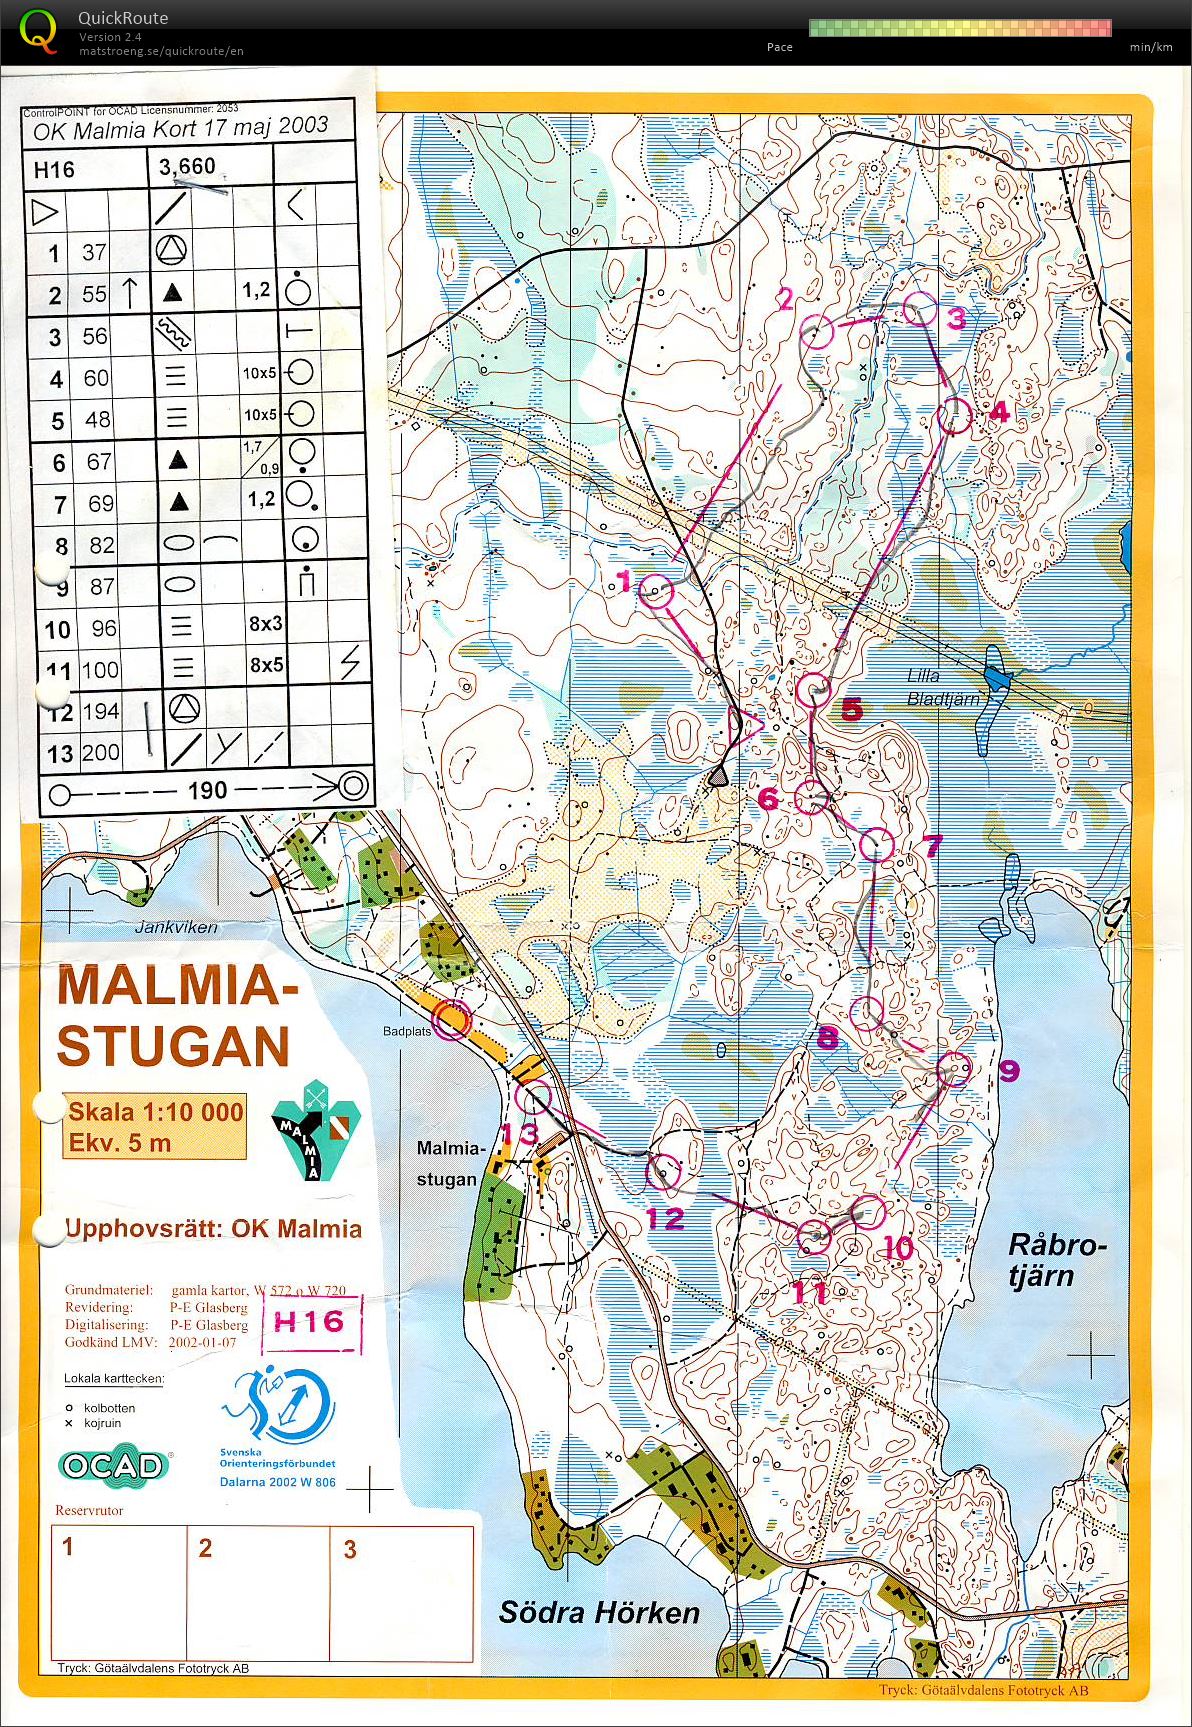 Malmia (2003-05-17)